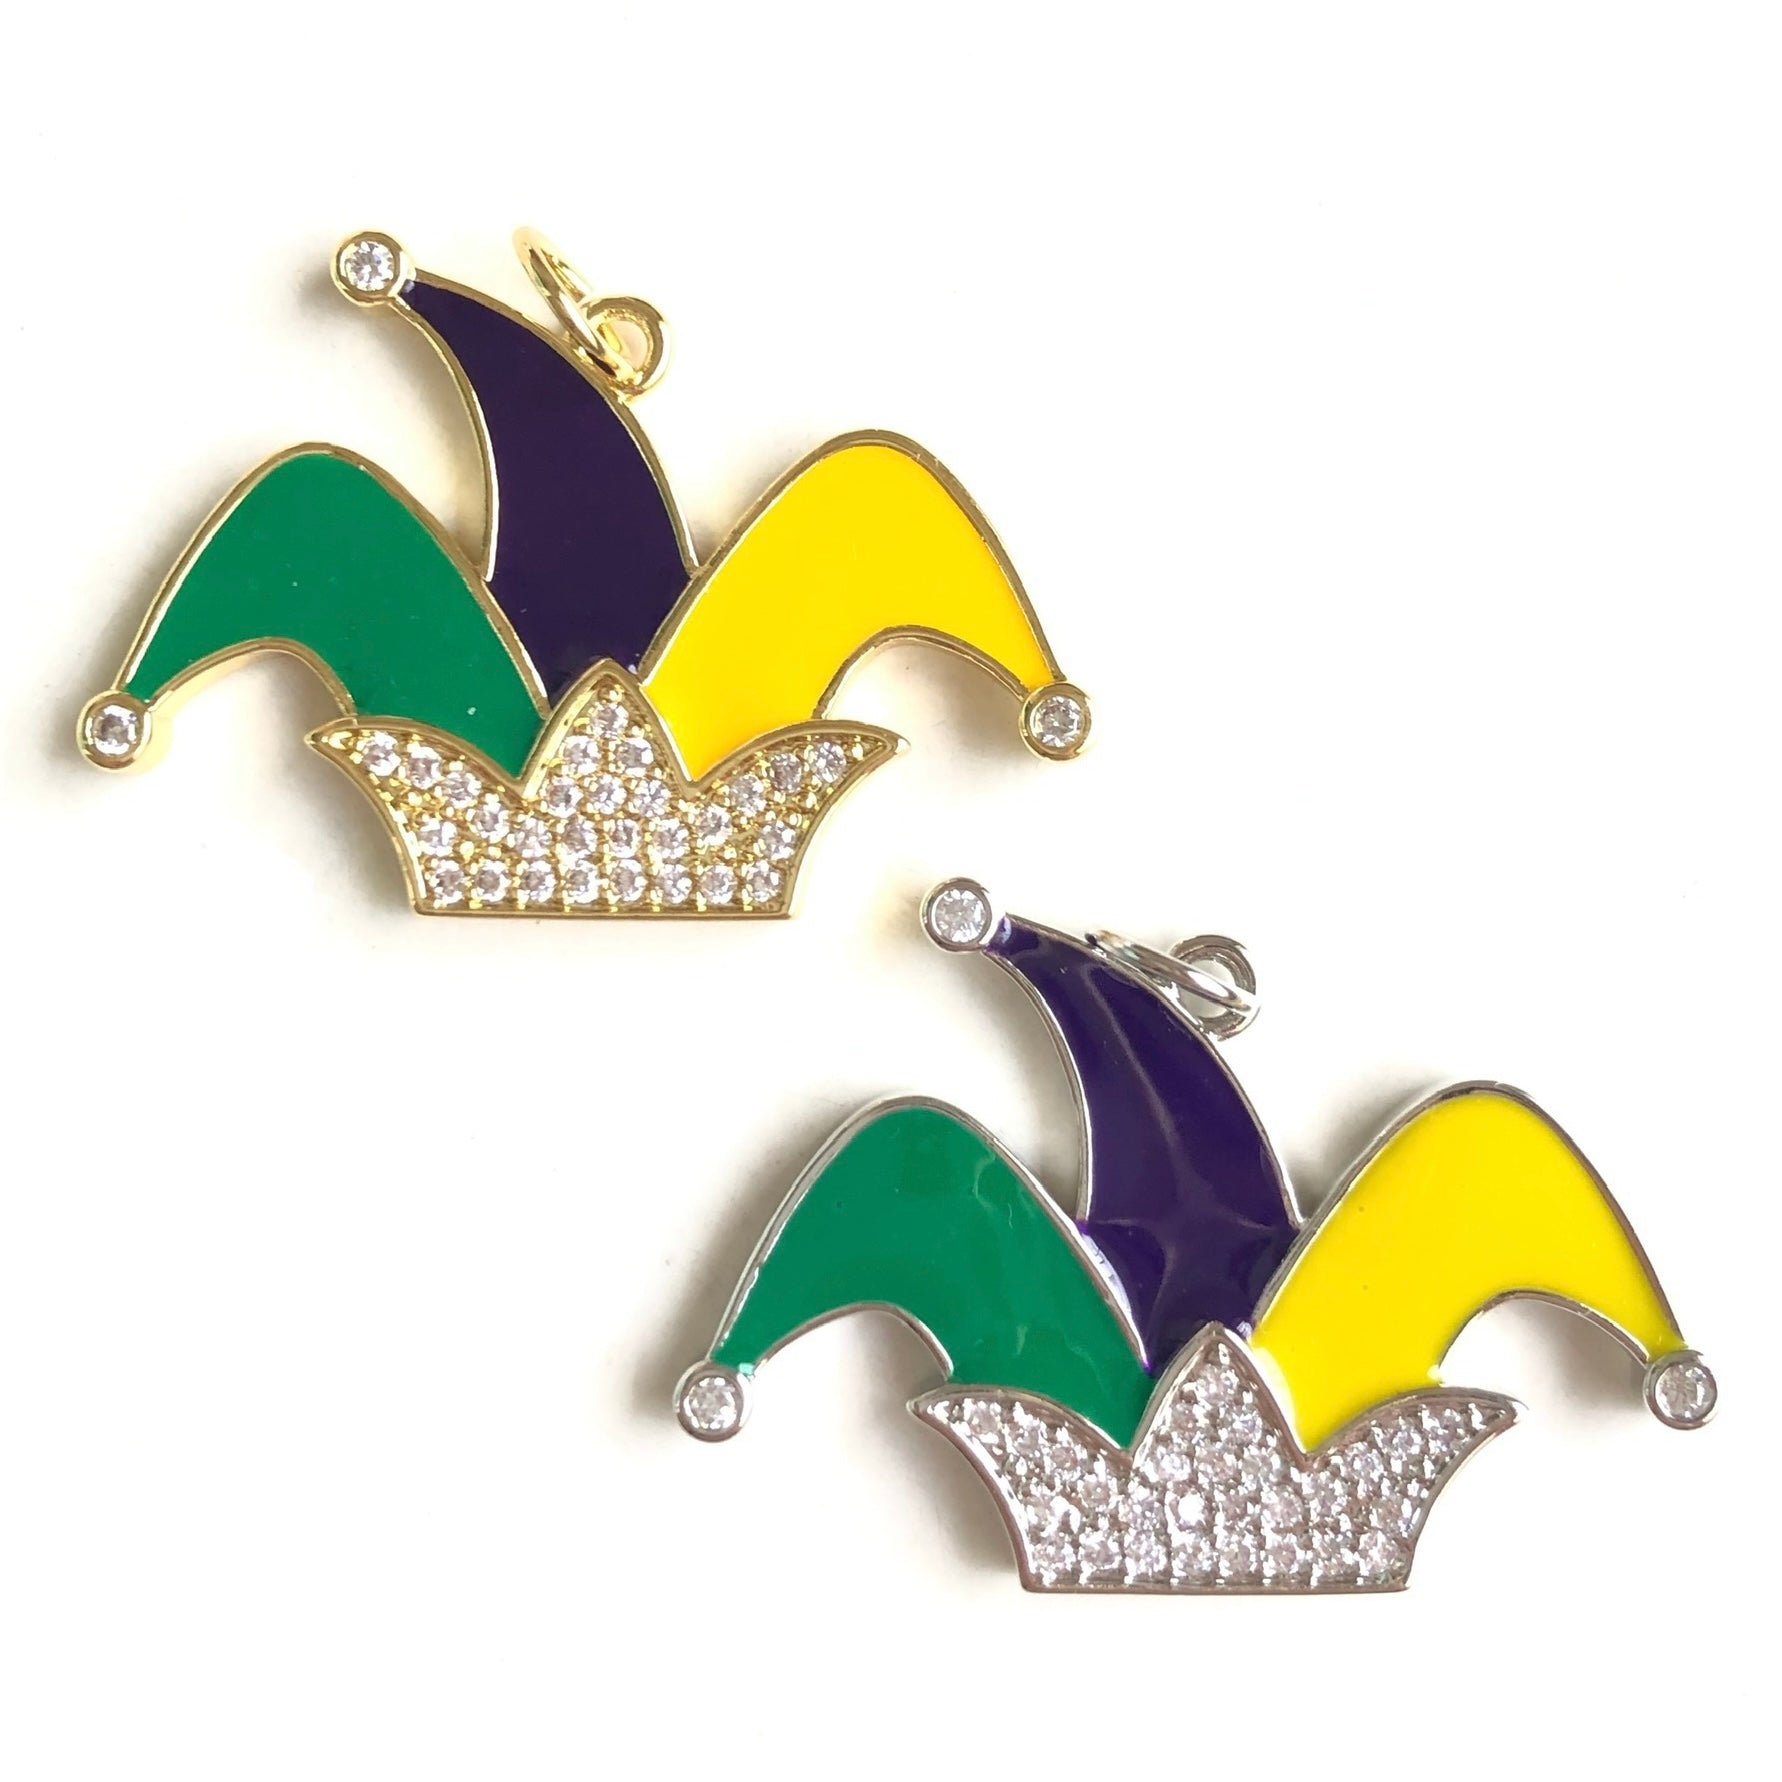 10pcs/lot CZ Paved Mardi Gras Joker Hat Charm Pendants Mix Colors CZ Paved Charms Mardi Gras New Charms Arrivals Charms Beads Beyond